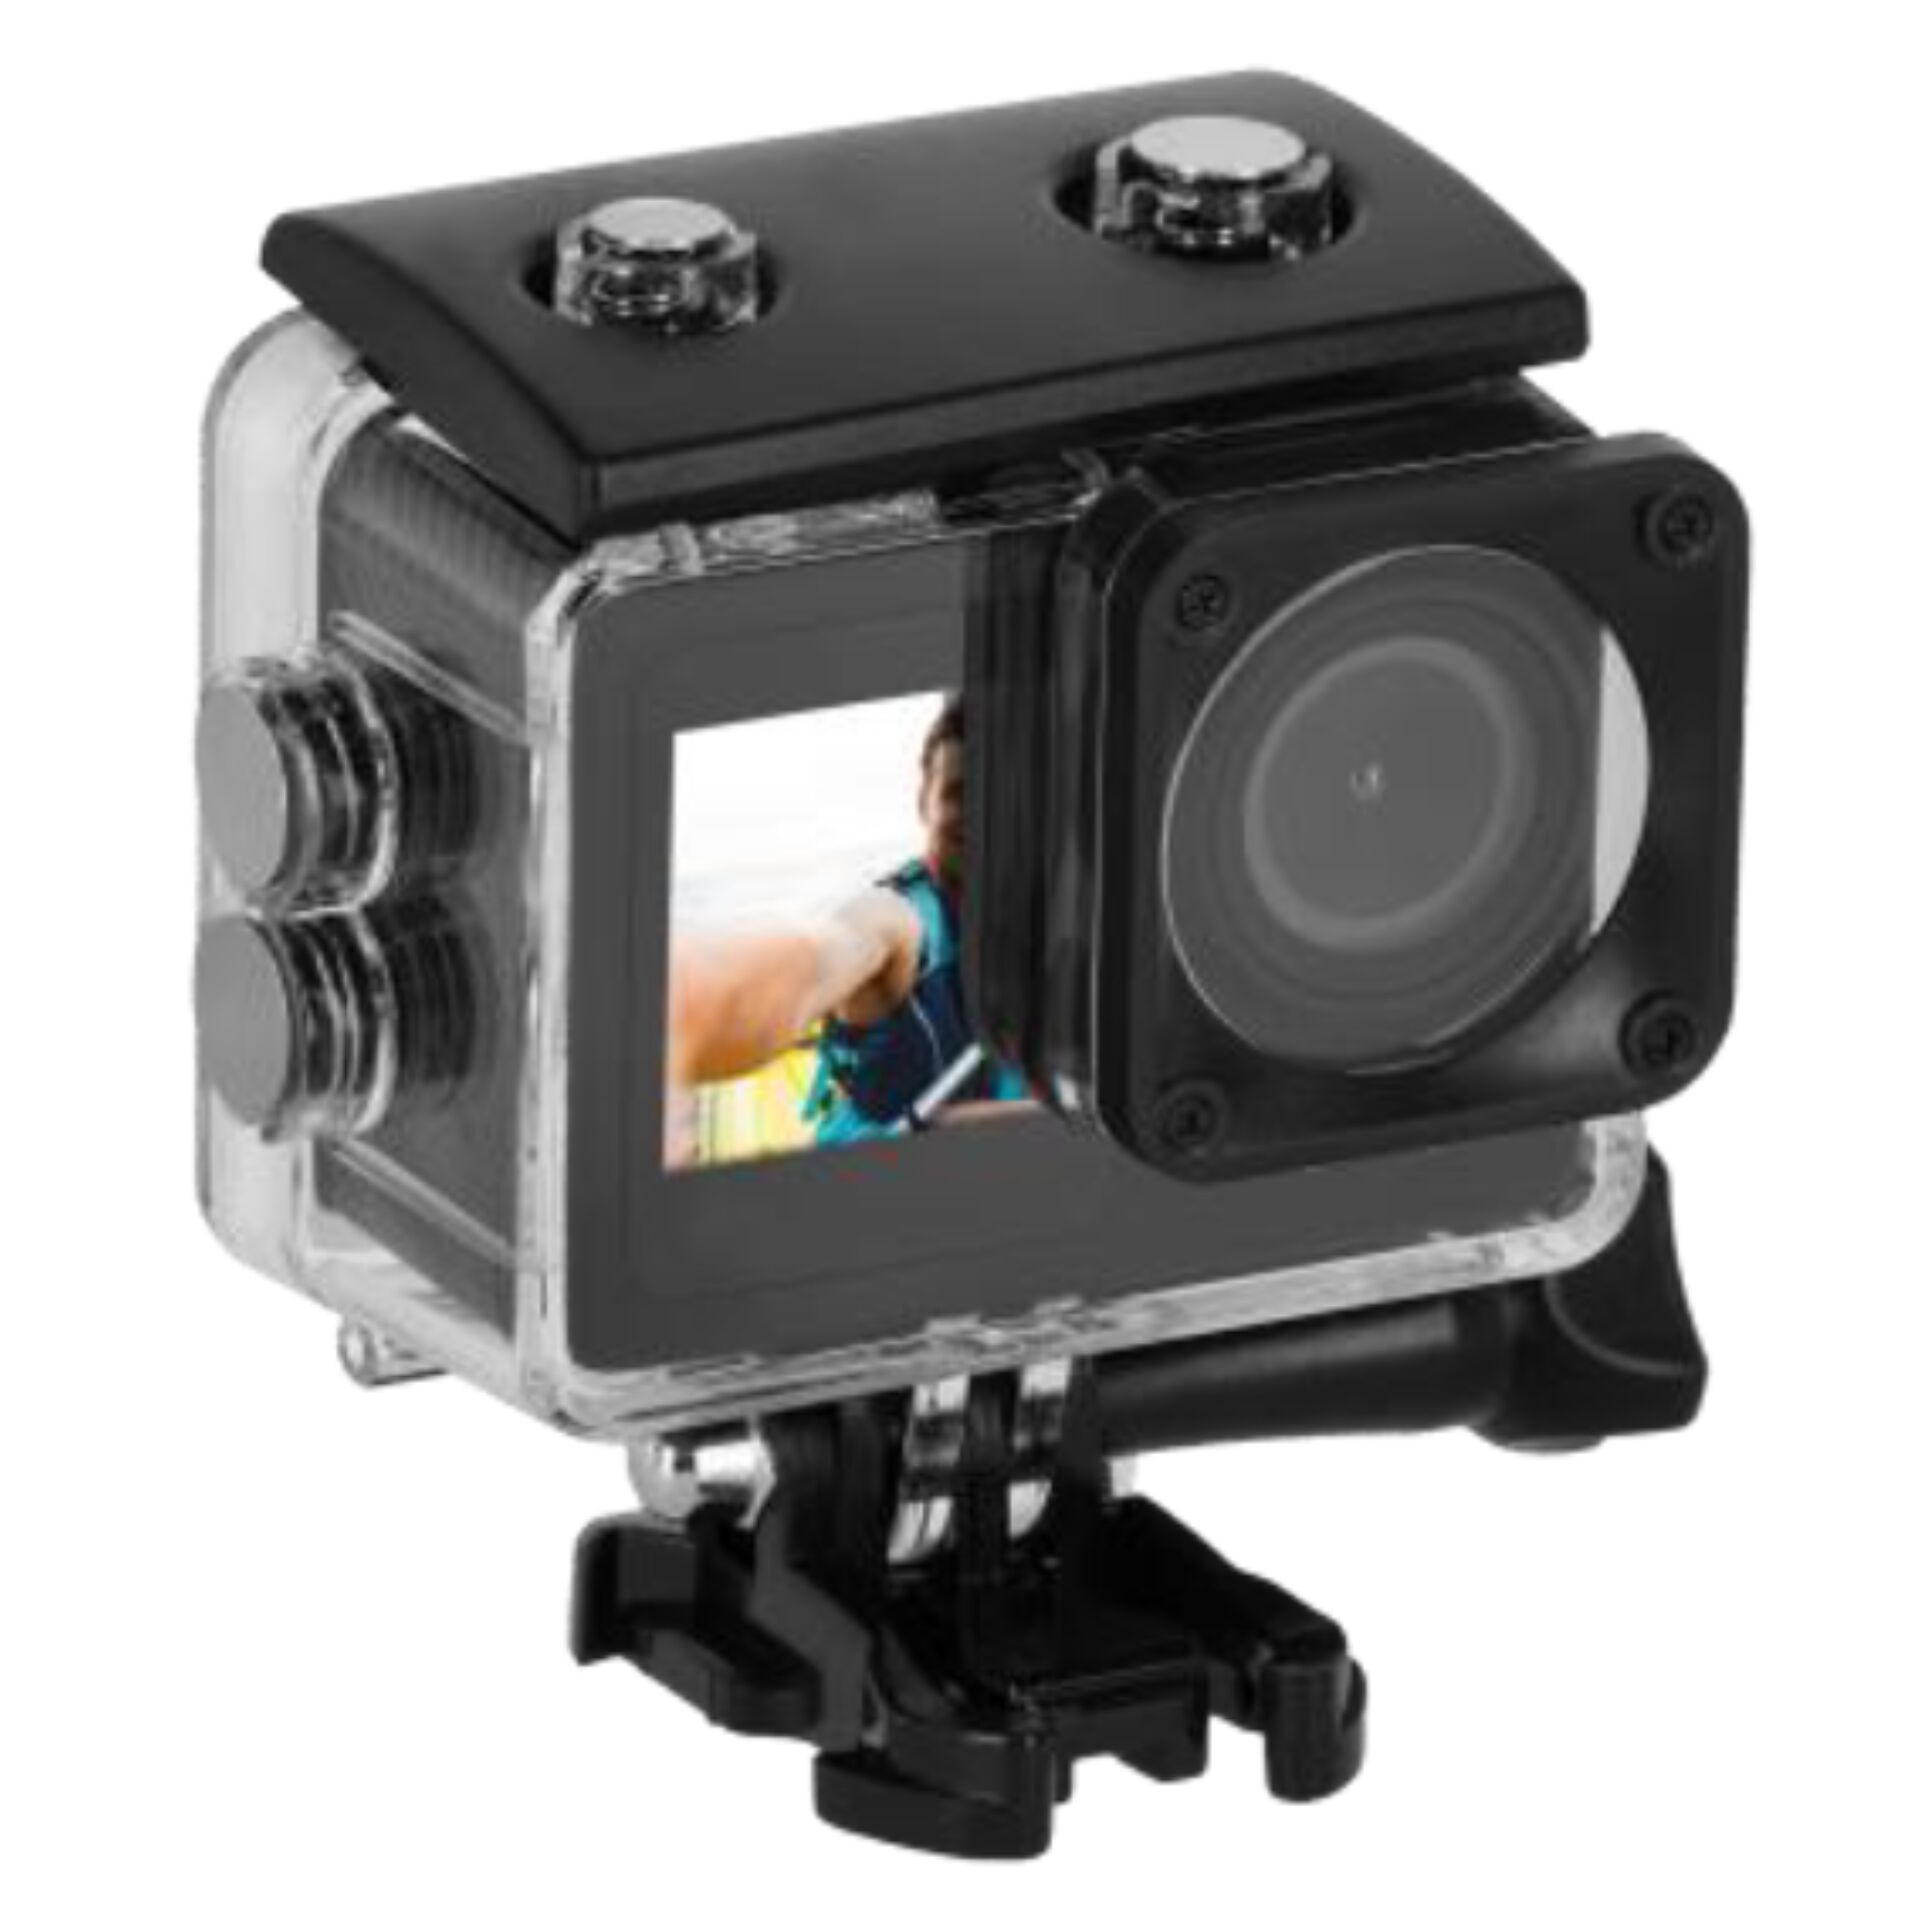 Rollei Actioncam D2 Pro Actionsport-Kamera 20 MP 4K Ultra HD CMOS WLAN 350 g